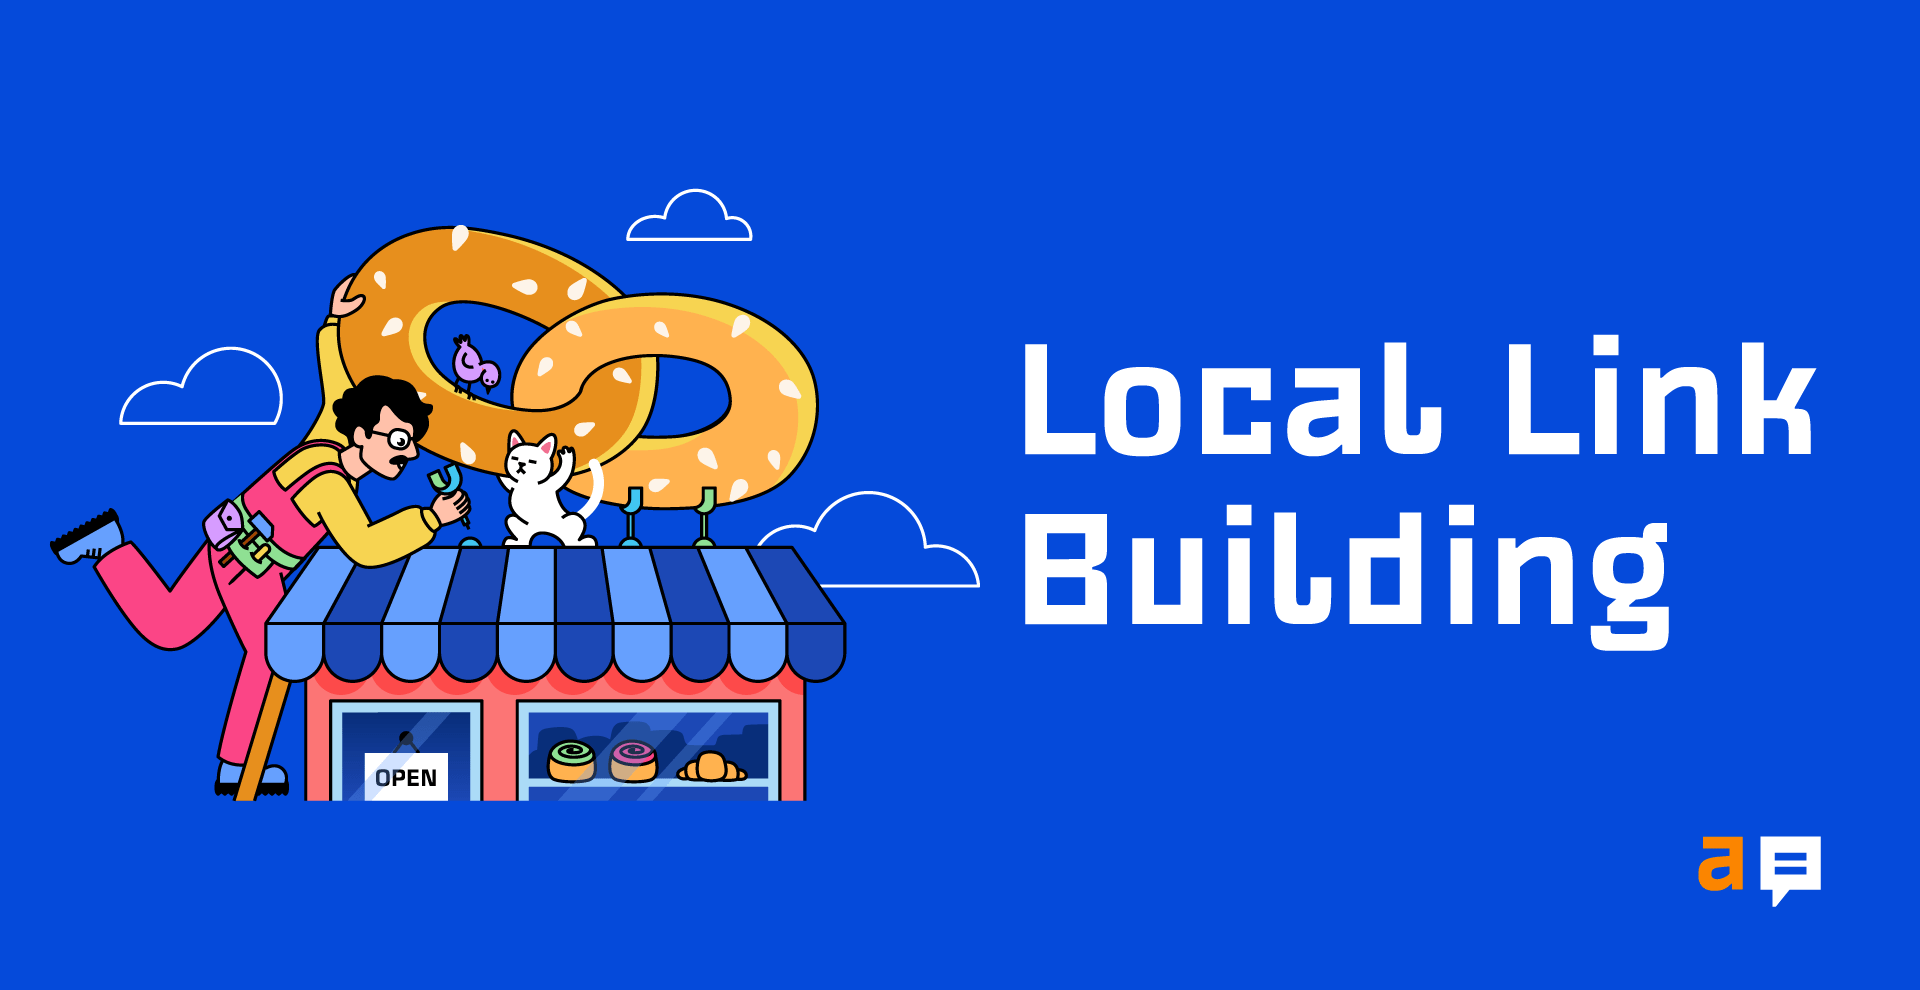 9 Easy Local Link Building Tactics